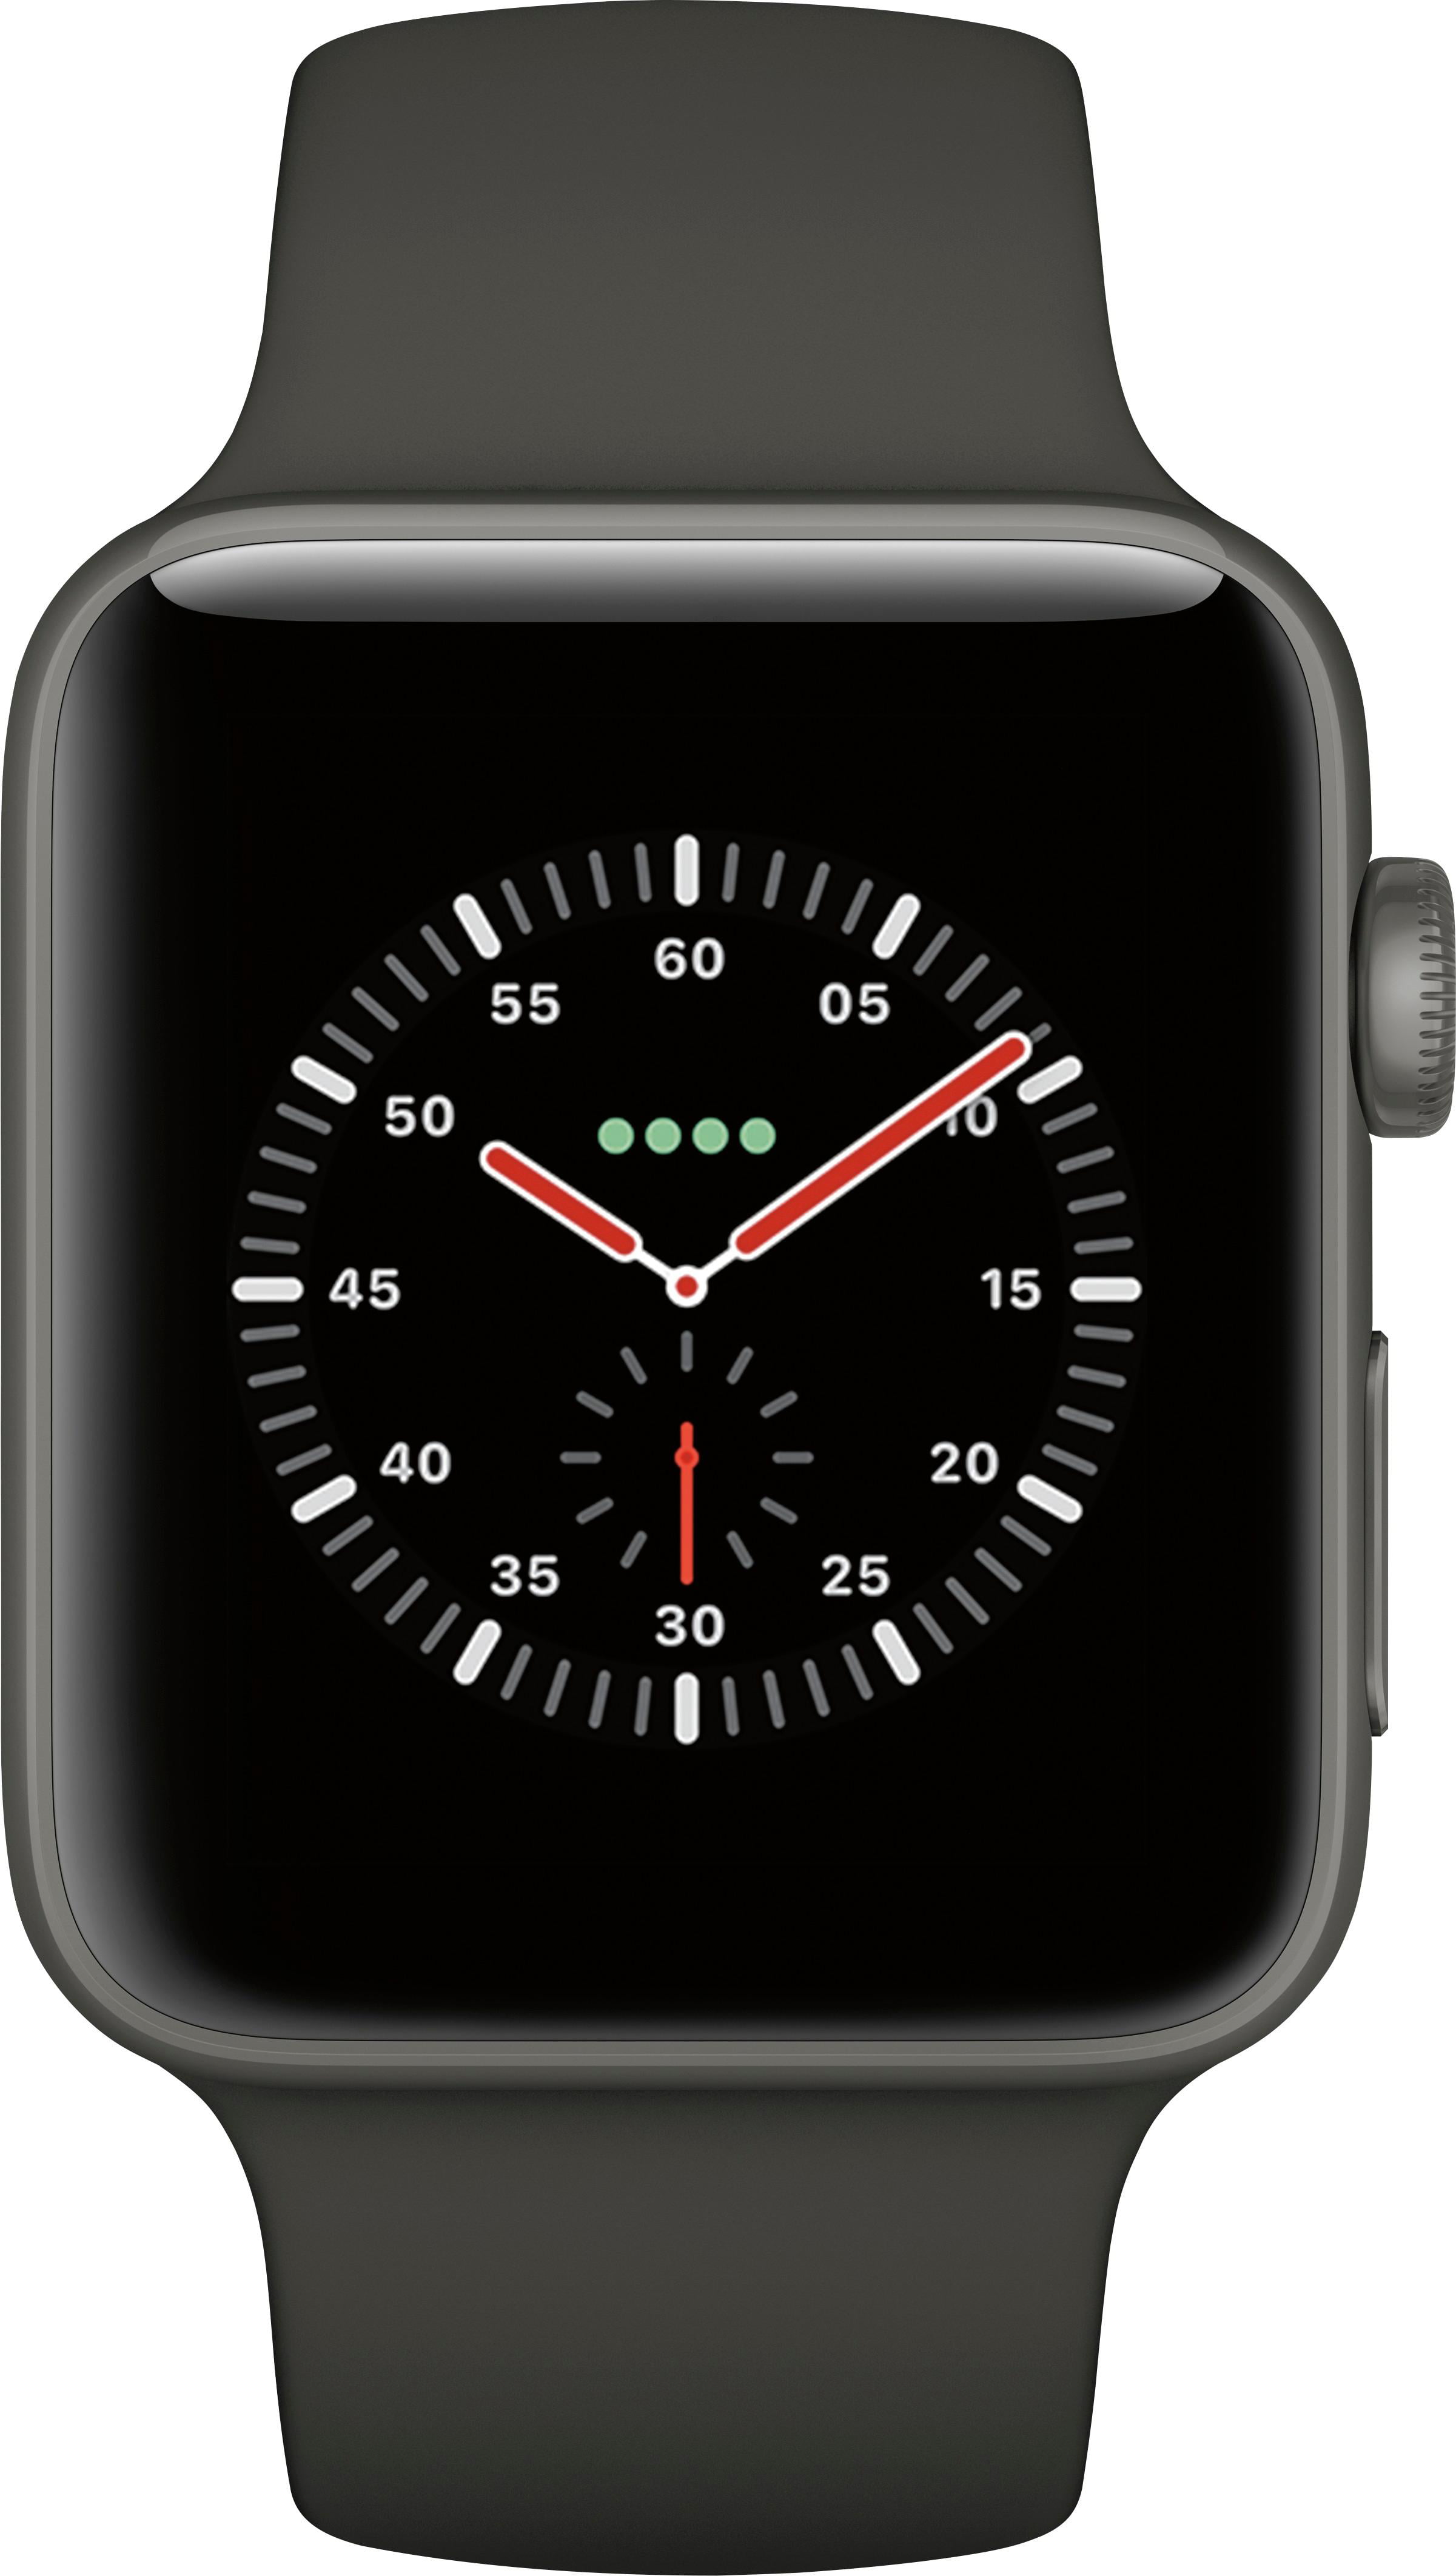 Watch часы 3 42mm. Apple watch Series 3 42 mm. Apple watch 6 44 mm. Apple watch Series 6 44mm. Apple watch Series 3 42 mm. Space Gray Aluminum Sport Band Black.